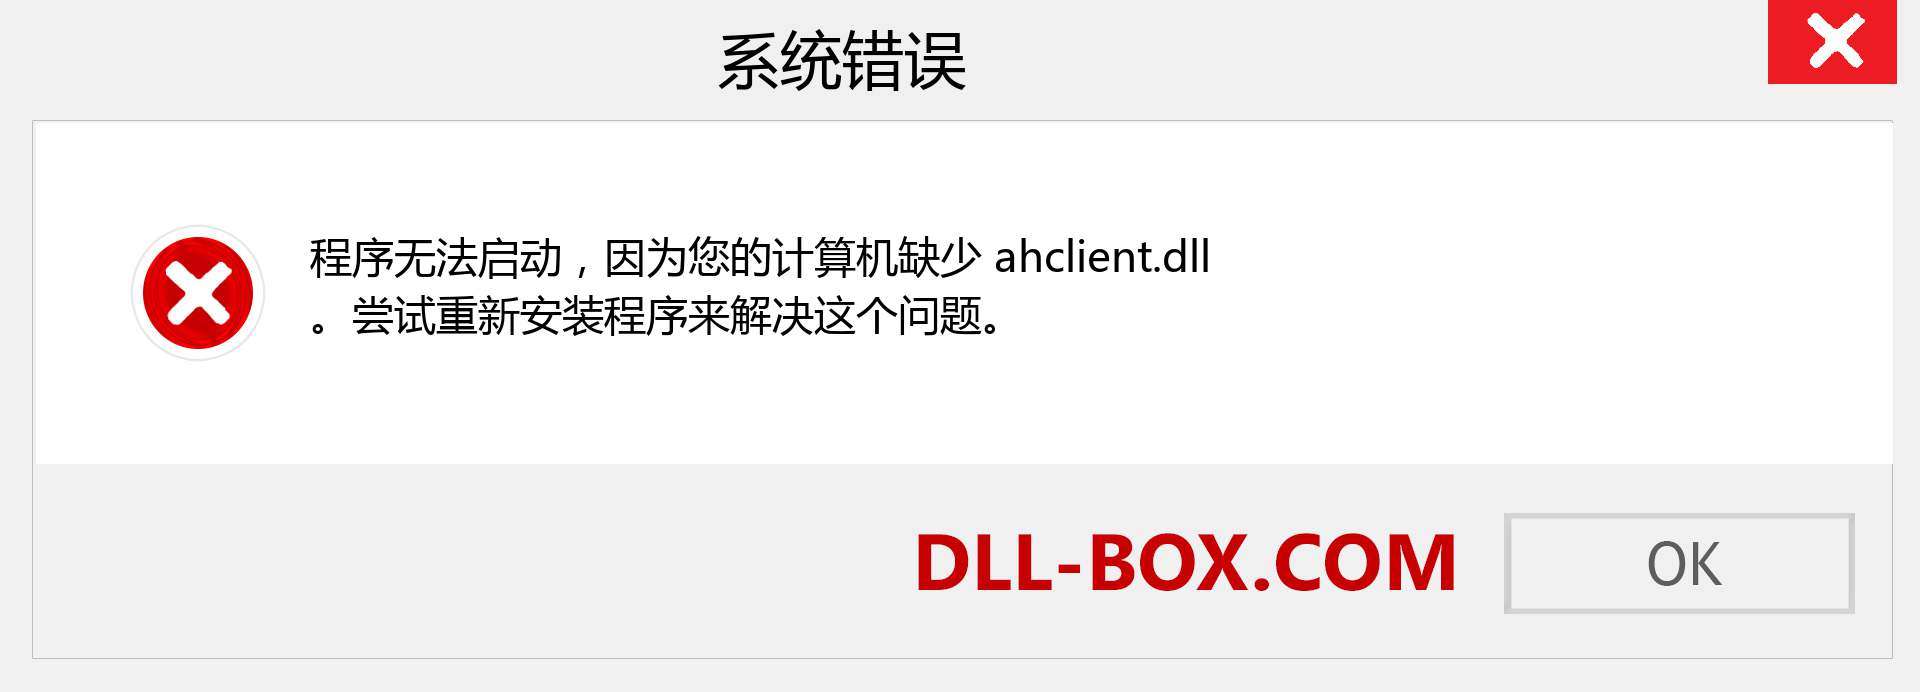 ahclient.dll 文件丢失？。 适用于 Windows 7、8、10 的下载 - 修复 Windows、照片、图像上的 ahclient dll 丢失错误